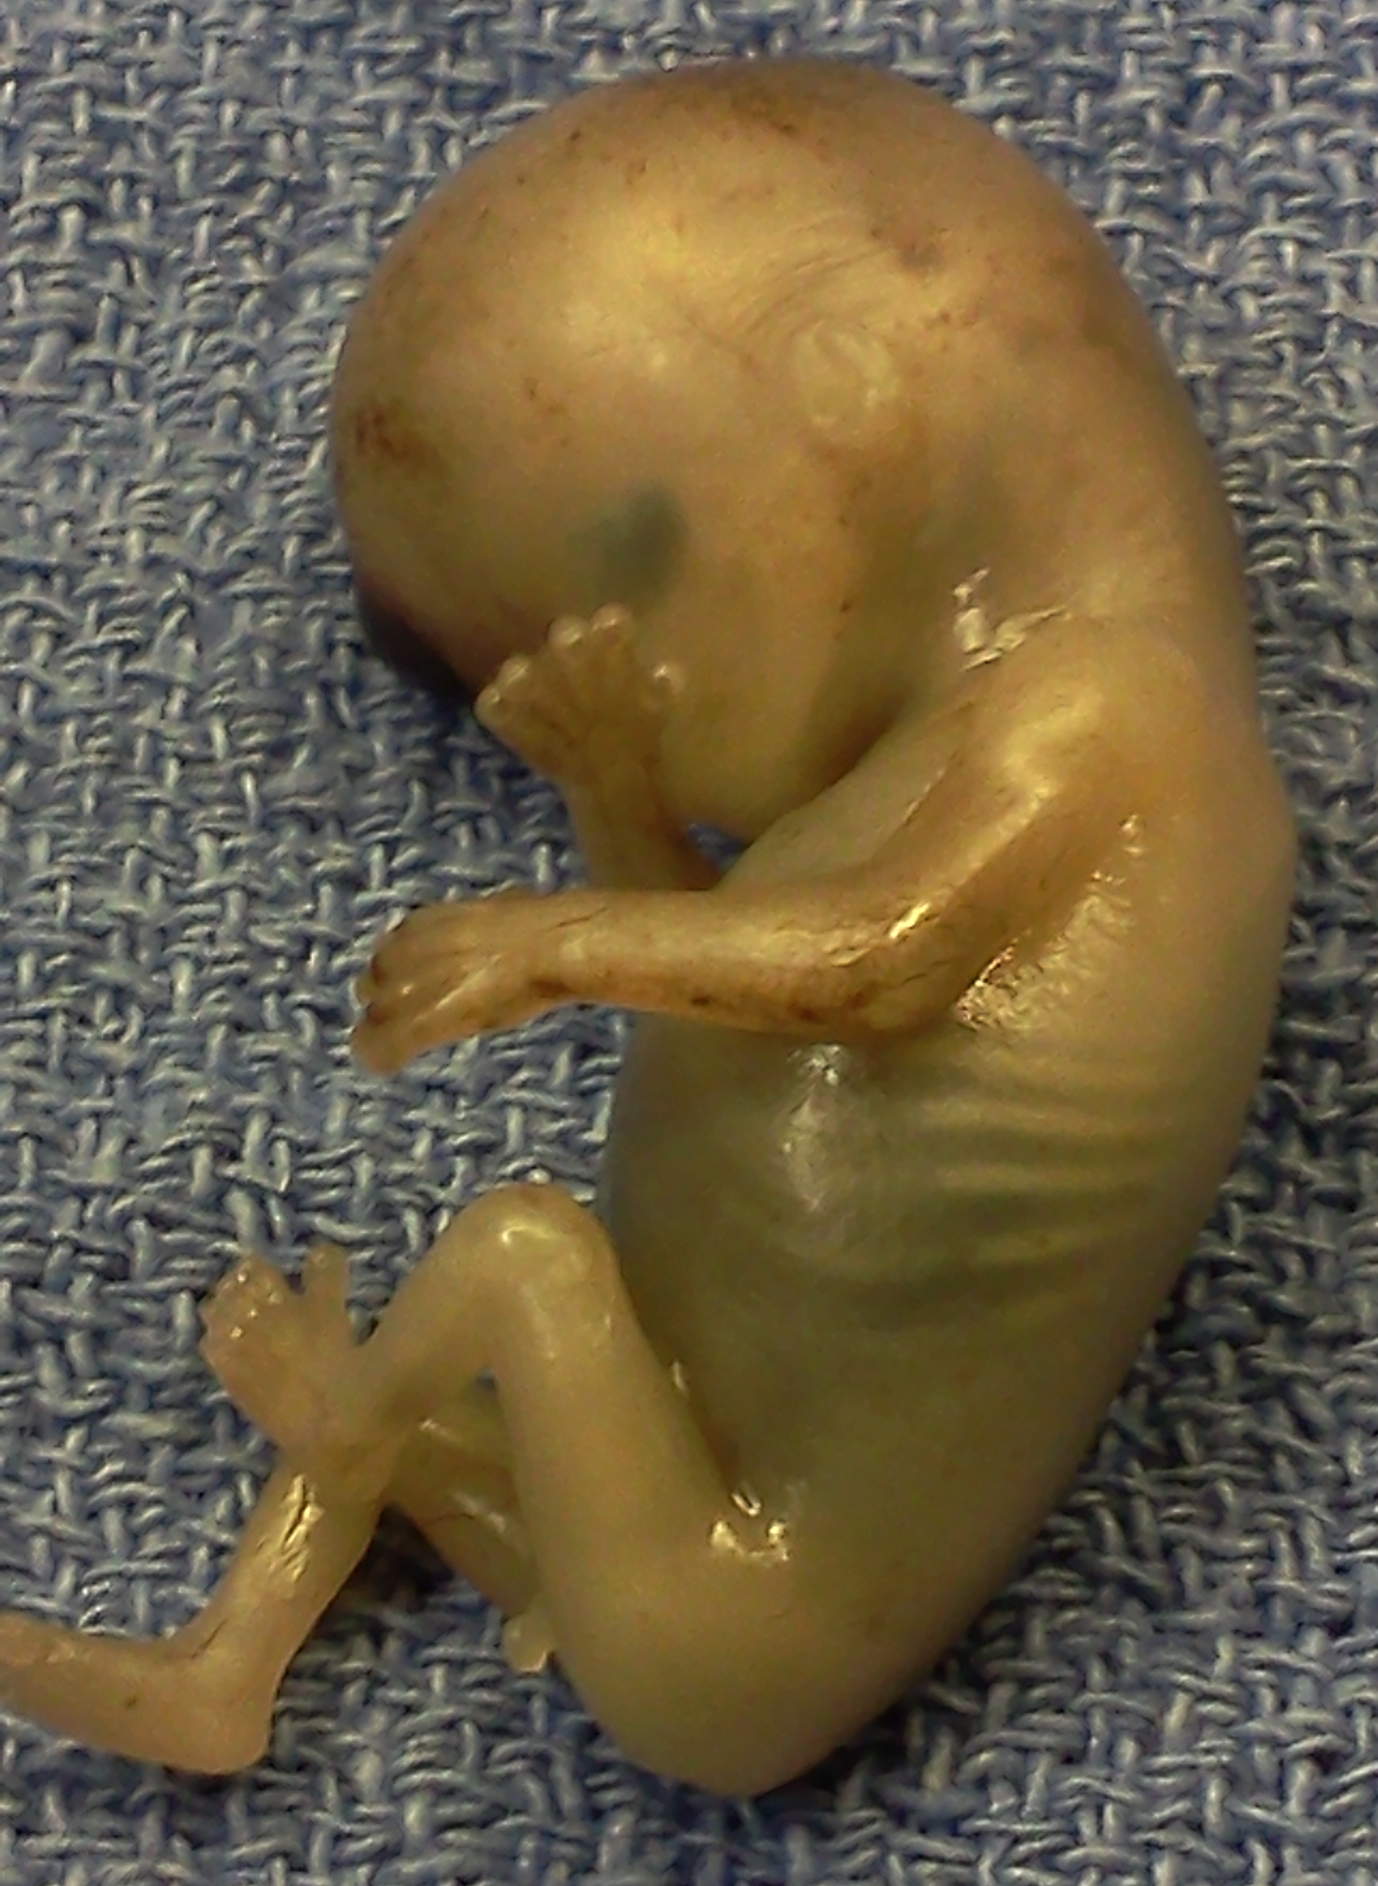 Foetus 11 Woche totgeburt abtreibung selektion aussortiert ausschuss menschenmuell embryo